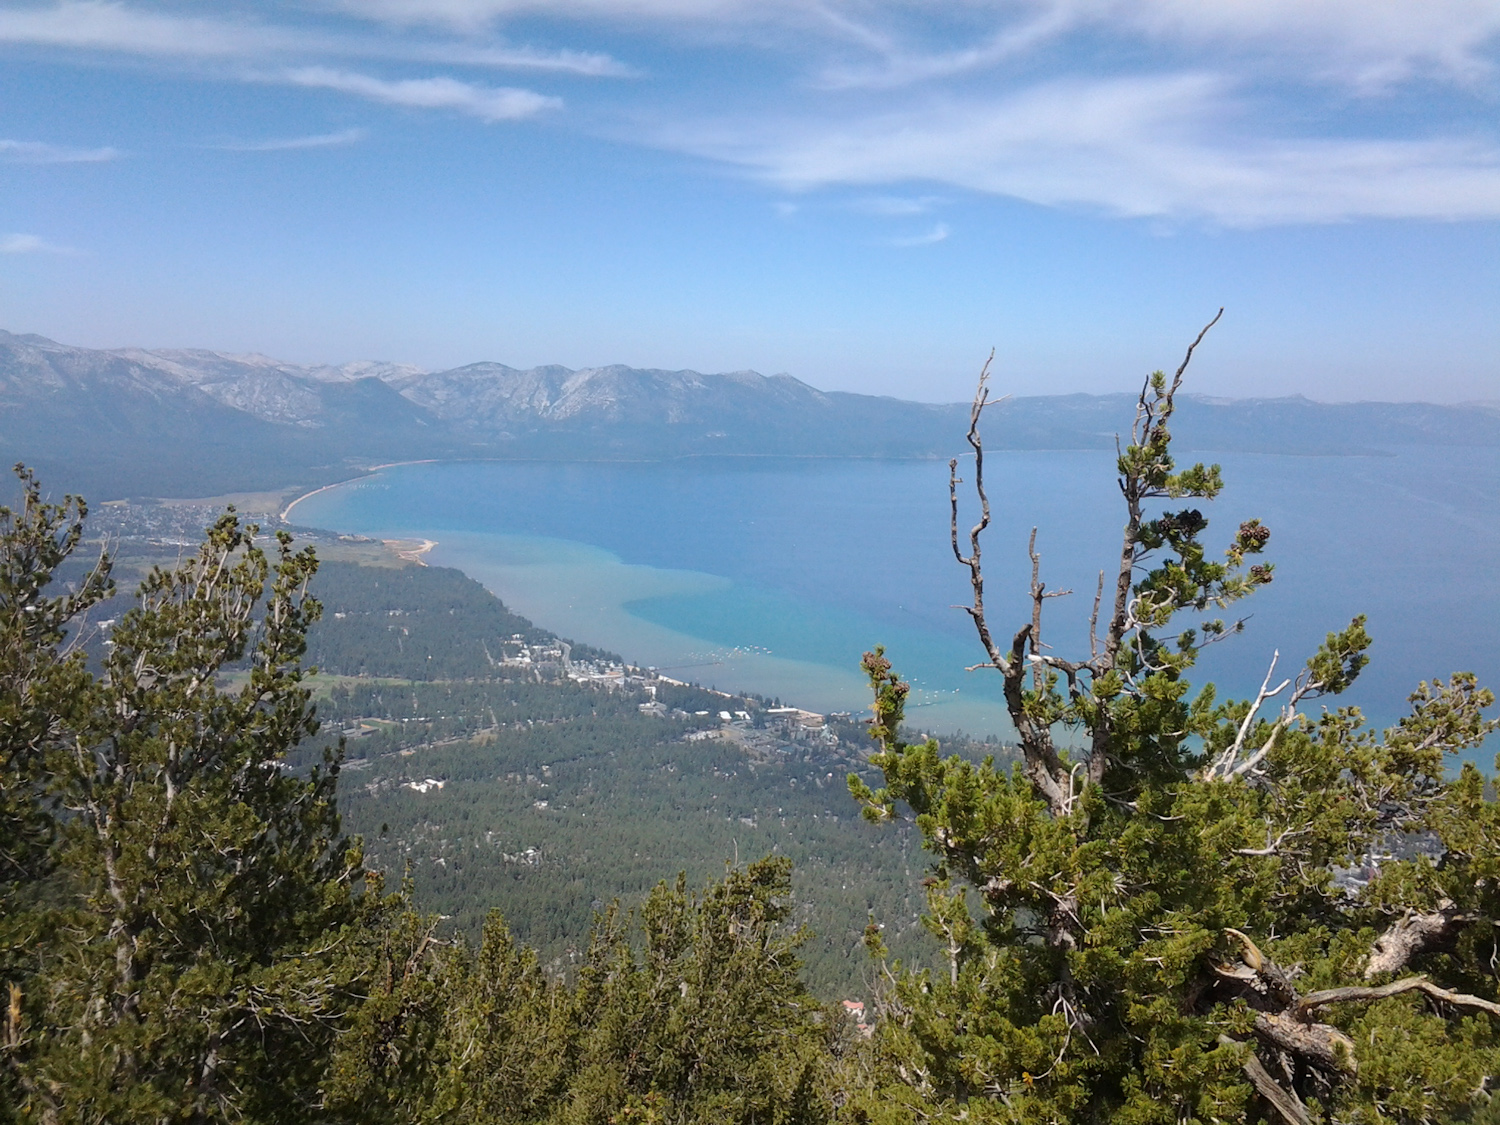 View of Lake Tahoe from Heavenly Ski Resort